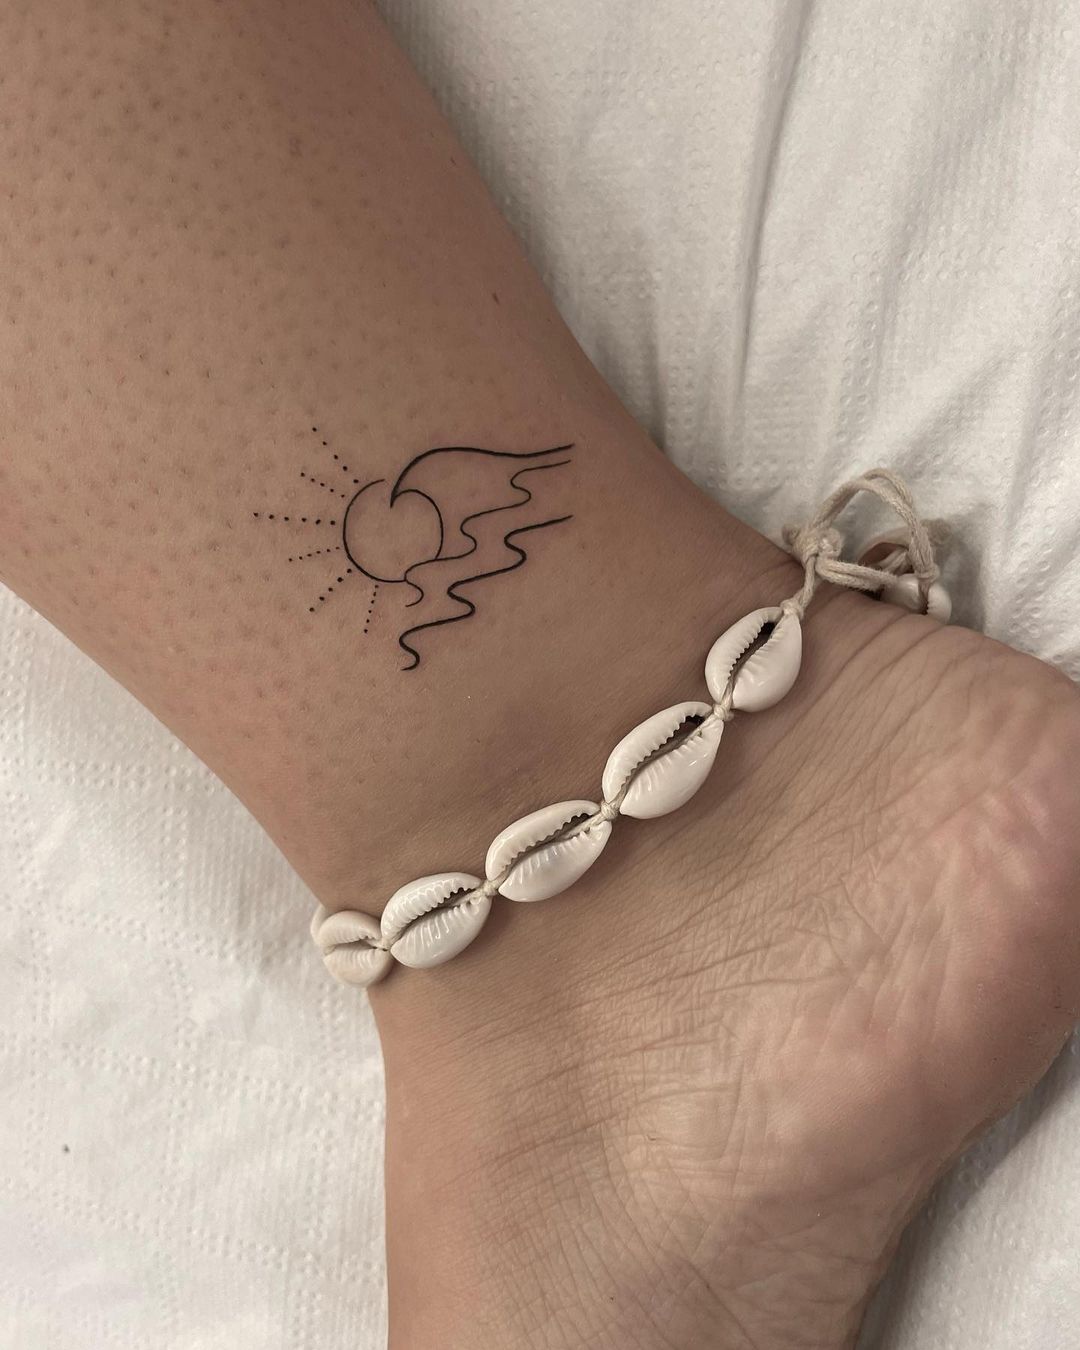 sun and waves tattoo by viburnum tattoo